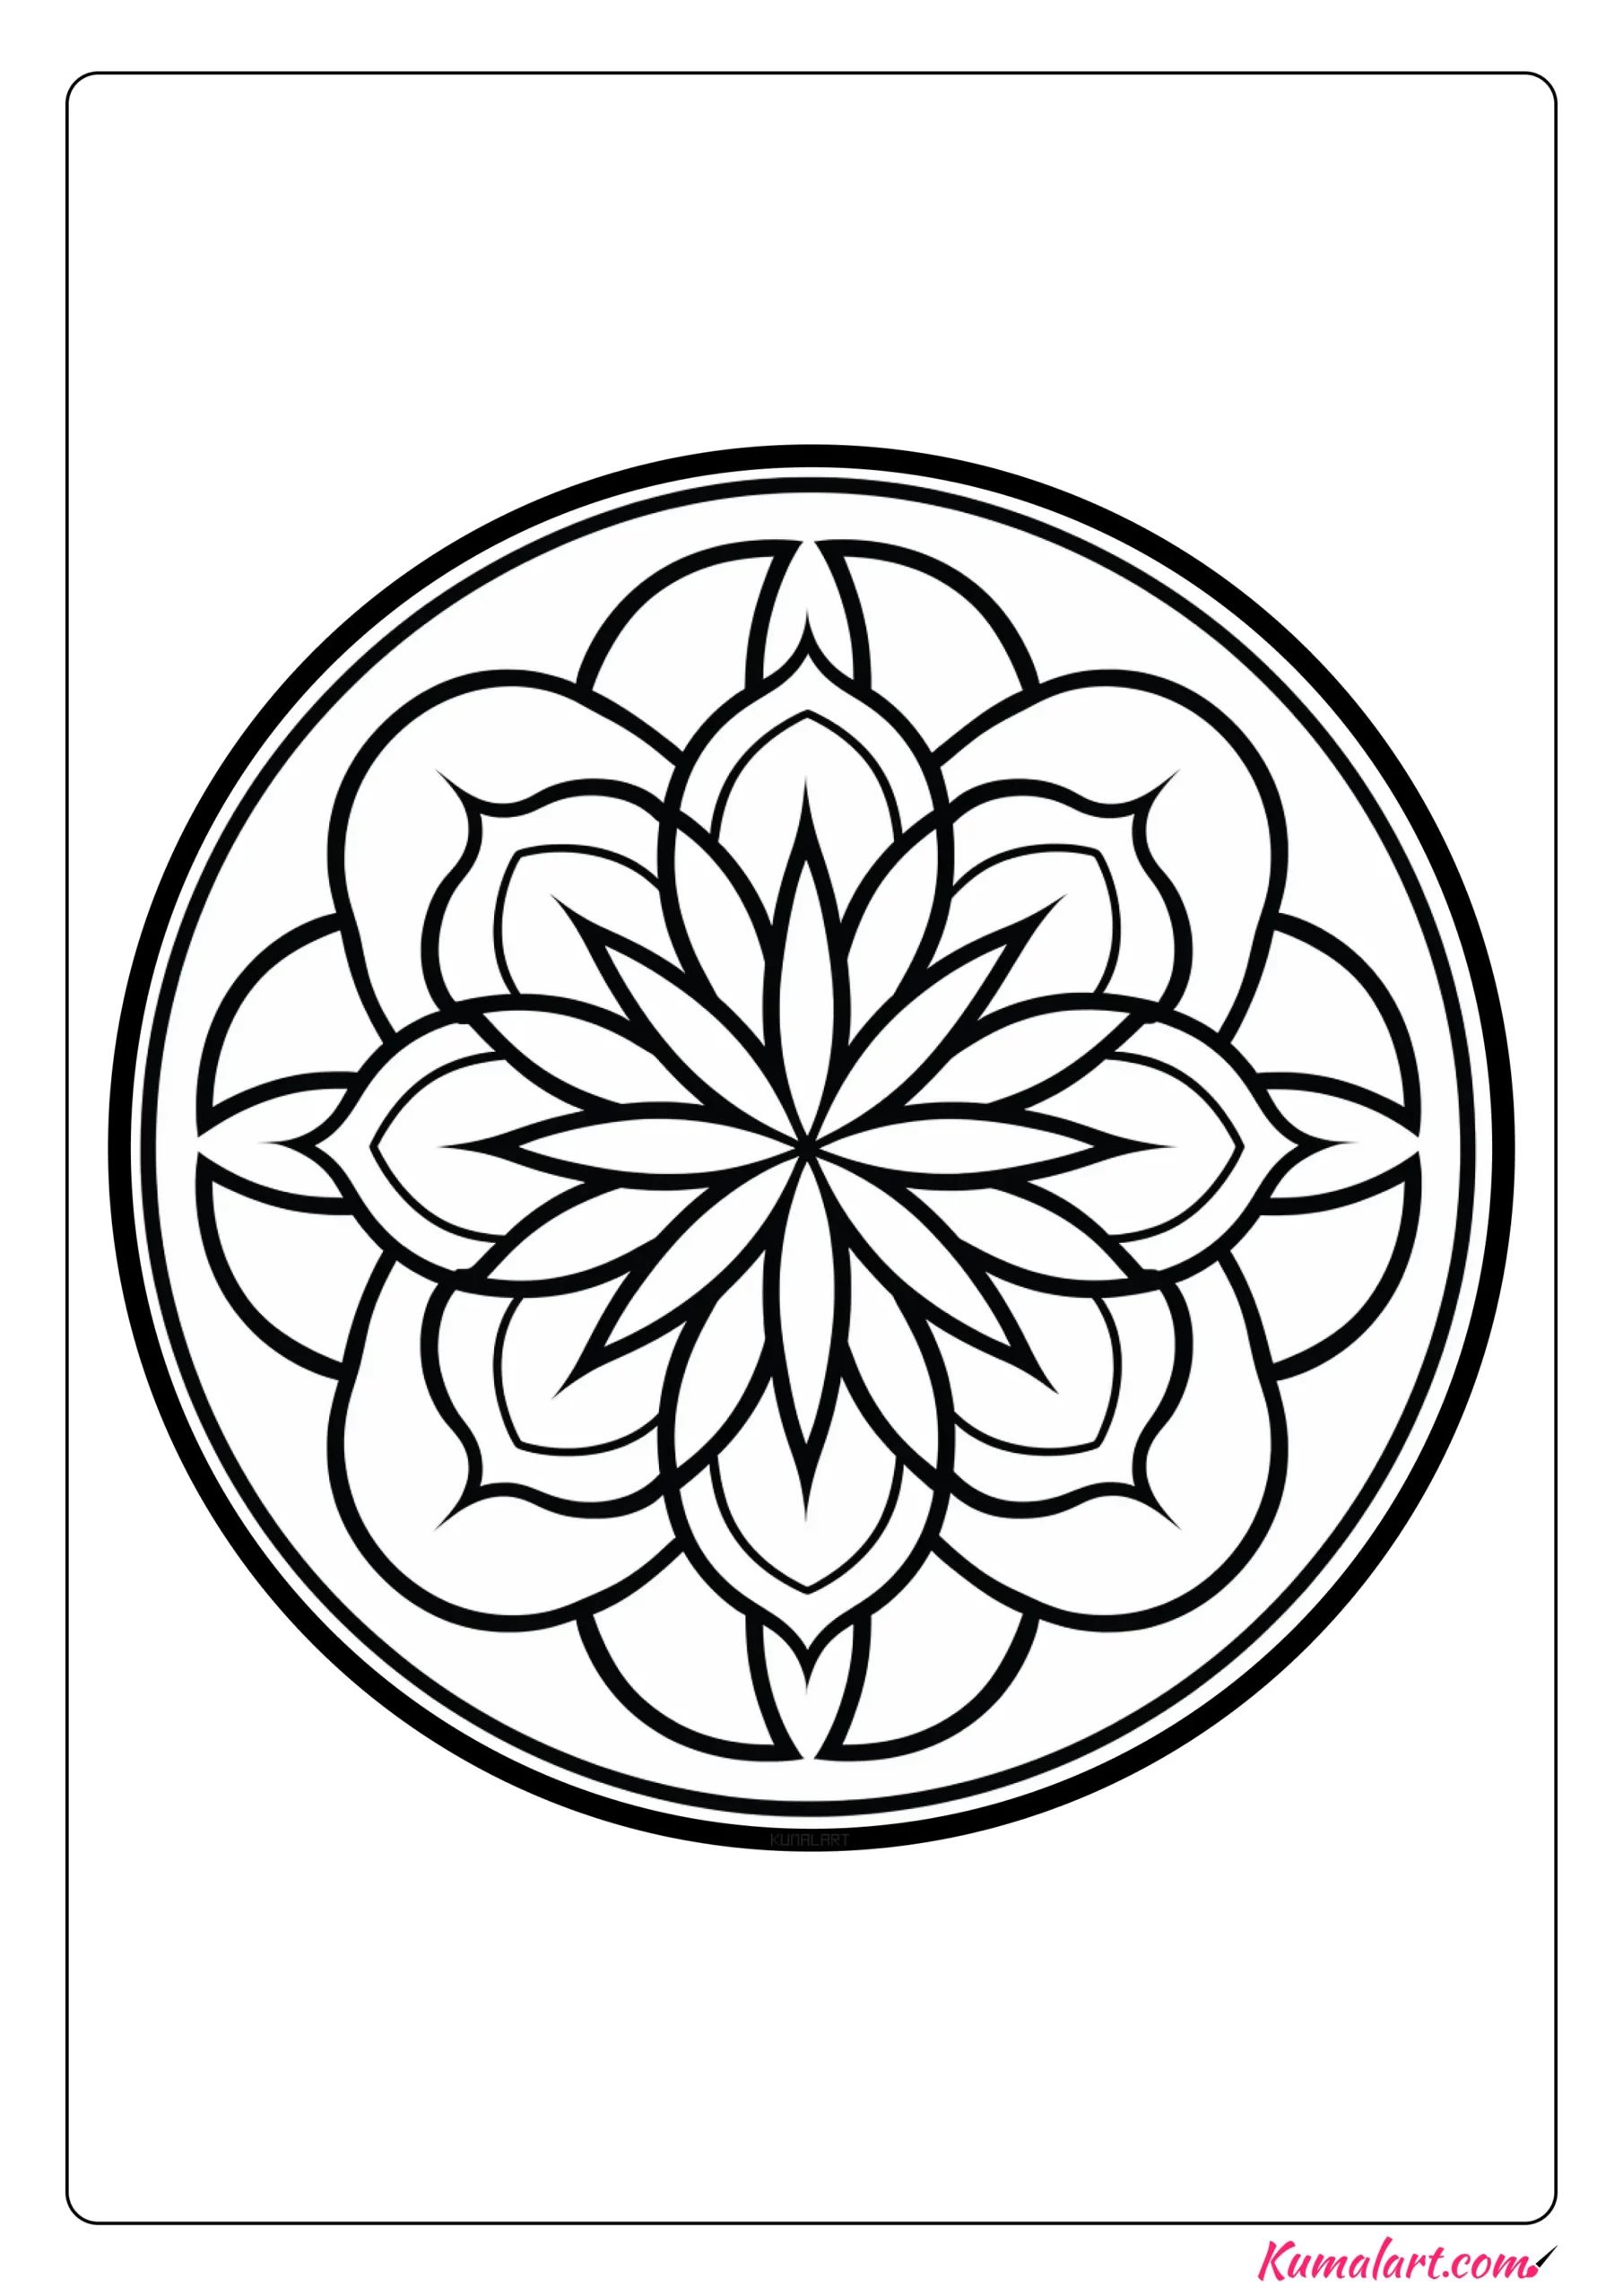 Mandala made of elegant flowers - Mandalas Adult Coloring Pages